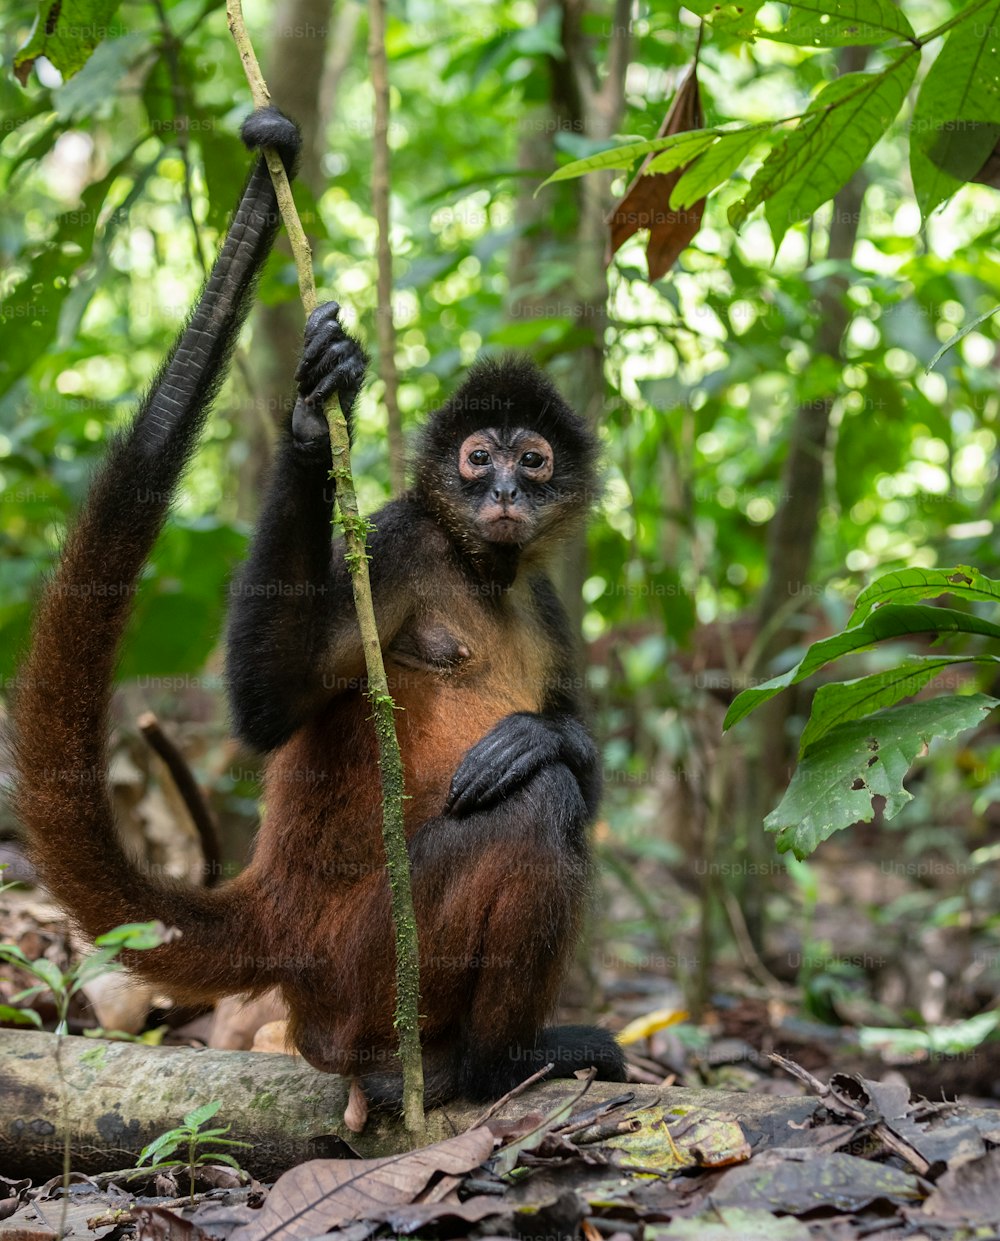 Spider monkey in costa rica in the rainforest